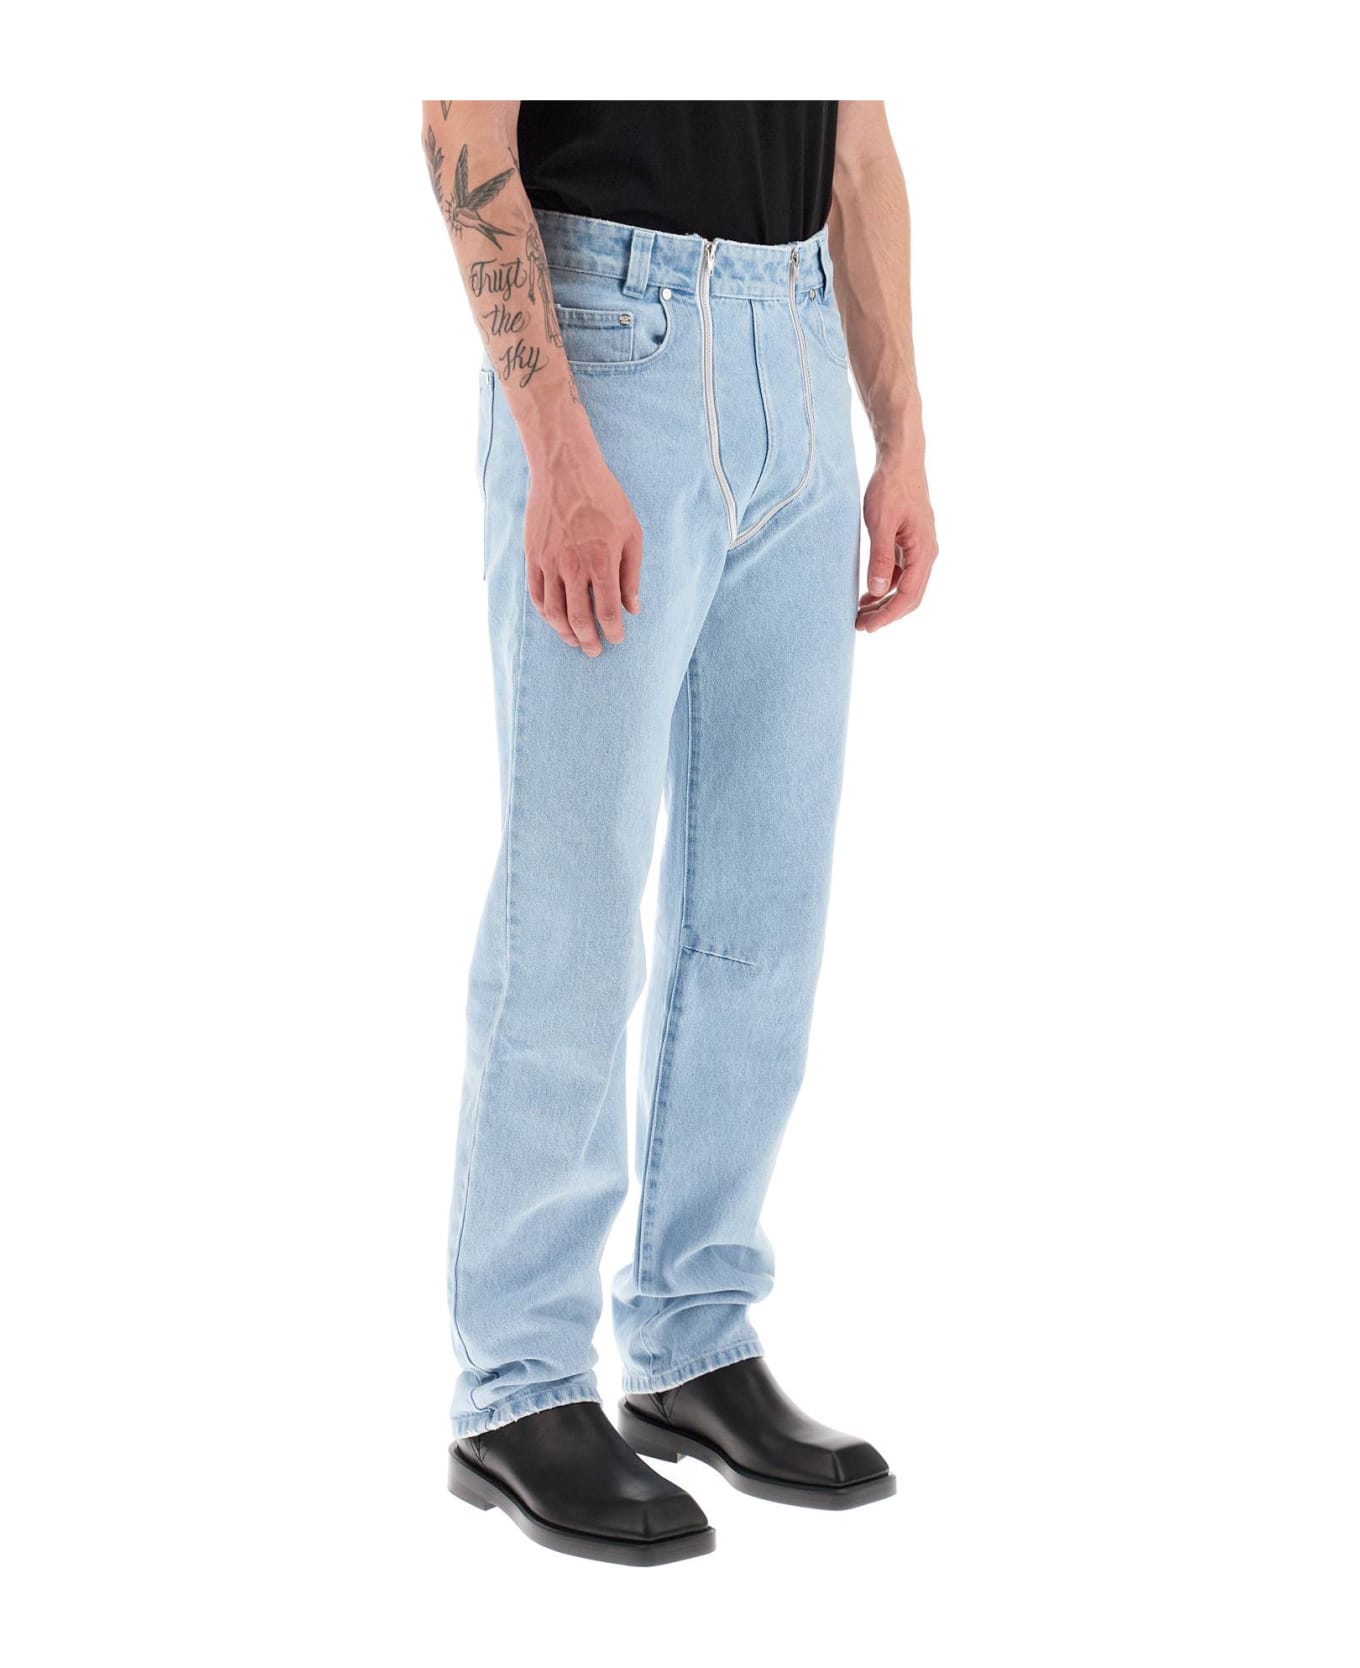 GMBH Straight Leg Jeans With Double Zipper - LIGHT INDIGO BLUE (Light blue)